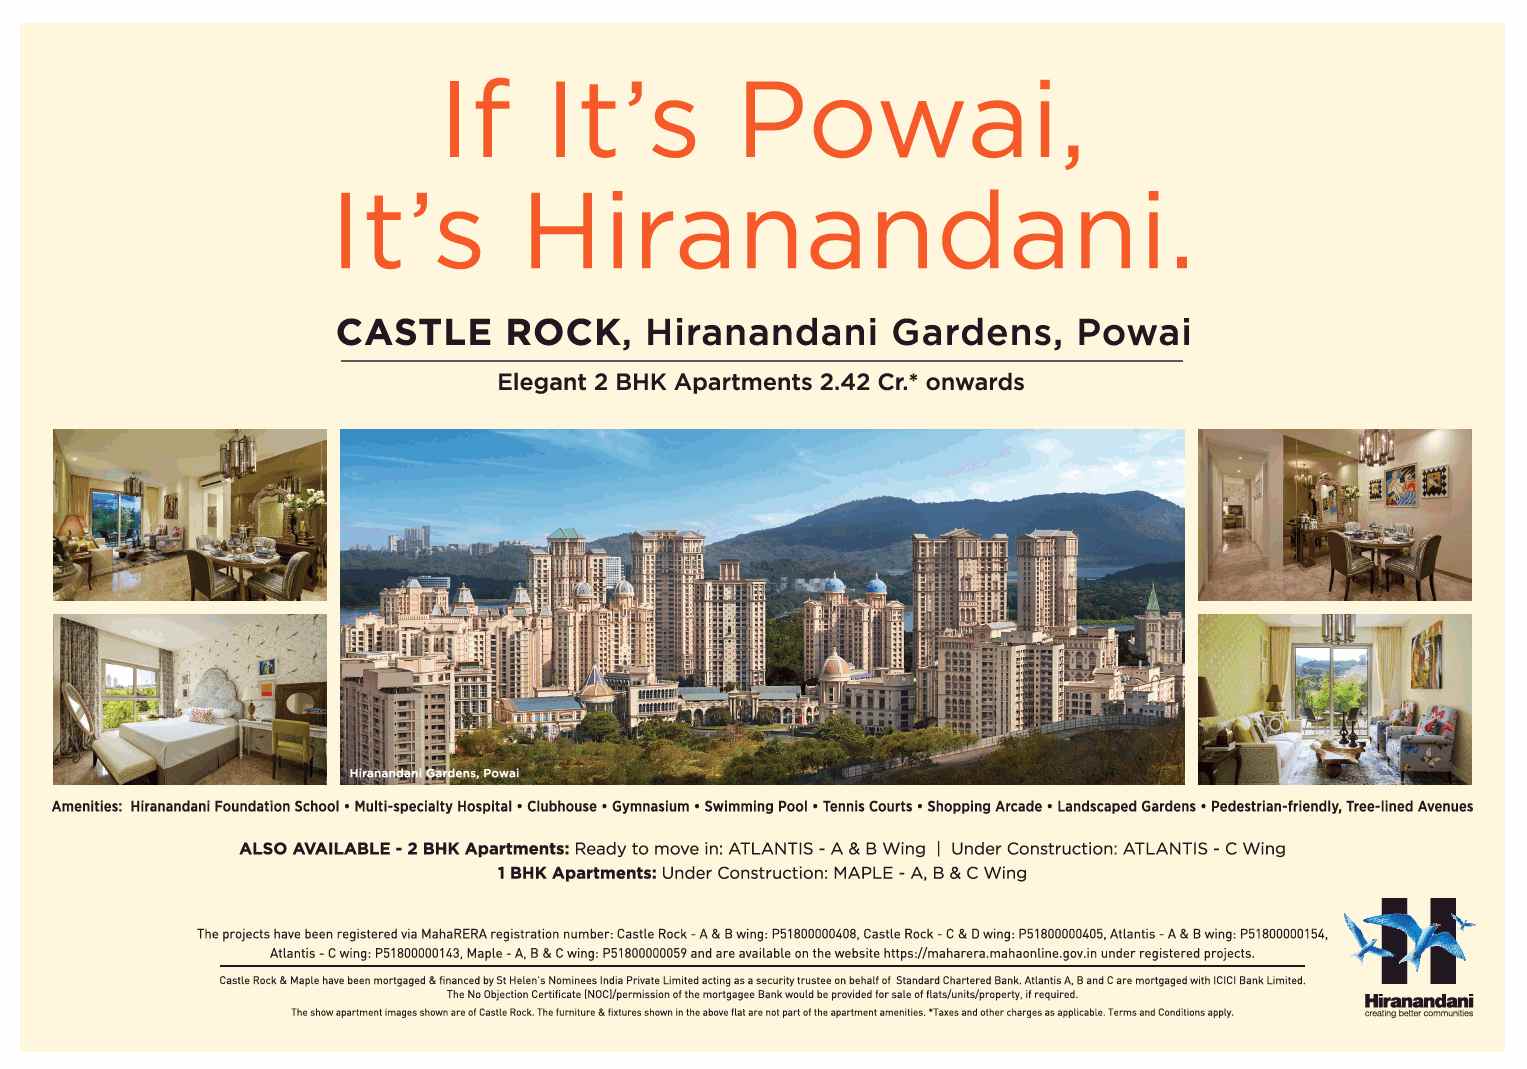 Book elegant 2 BHK apartments @ Rs 2.42 cr at Hiranandani Castle Rock in Powai, Mumbai Update